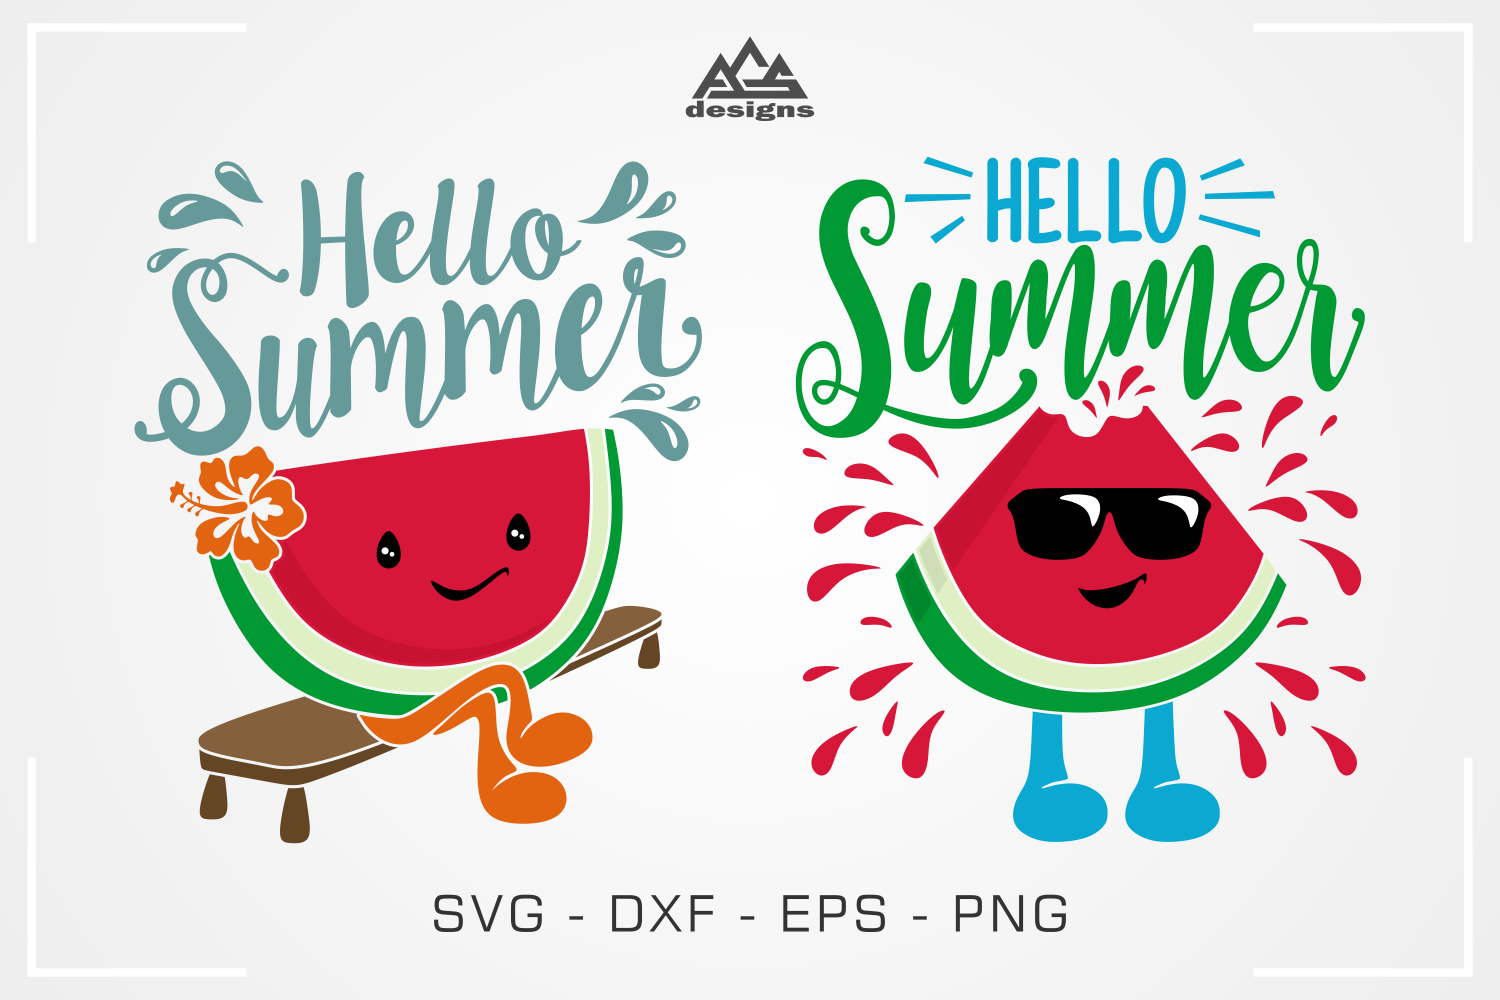 Download Hello Summer Watermelon Svg Design By AgsDesign | TheHungryJPEG.com